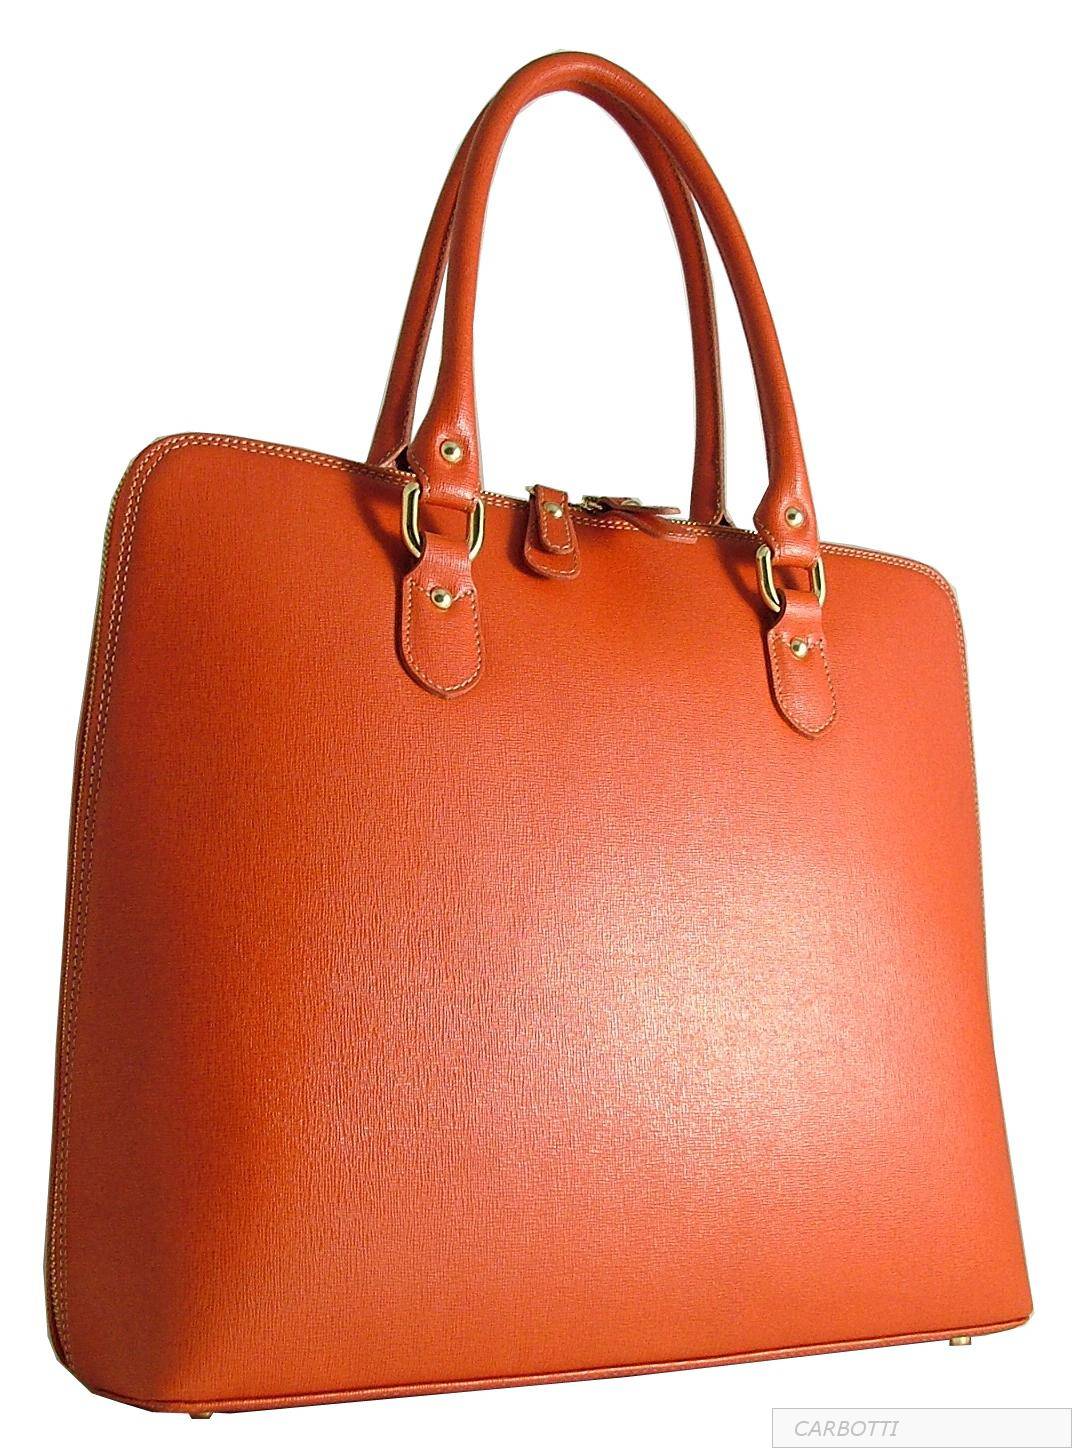 Wholesale Italian handbags: Italian manufacturers brands of leather bags